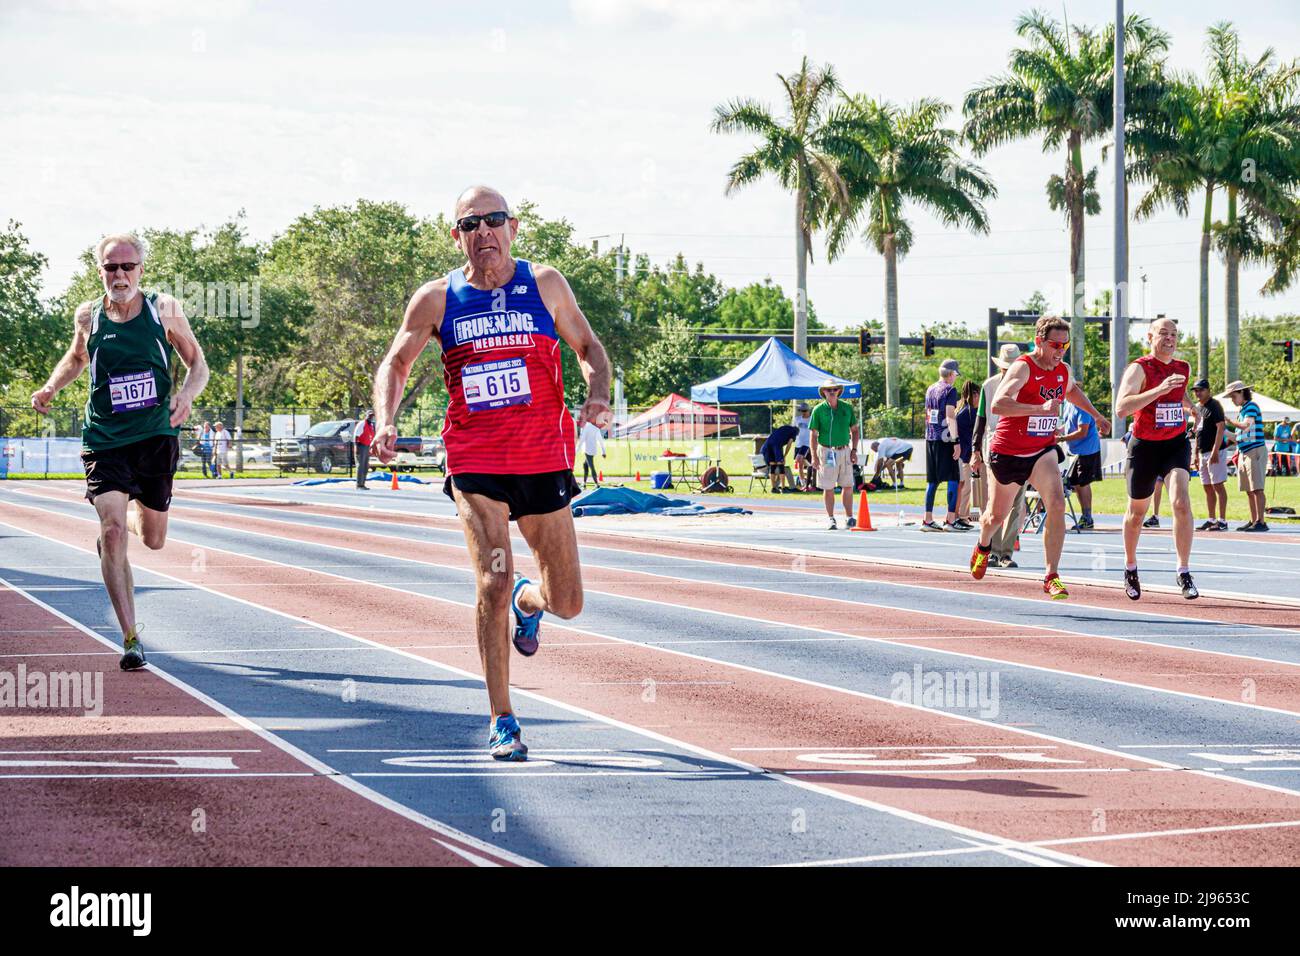 Fort Ft. Lauderdale Florida, Ansin Sports Complex Track & Field National Senior Games, corredores de carreras de adultos mayores que compiten Foto de stock